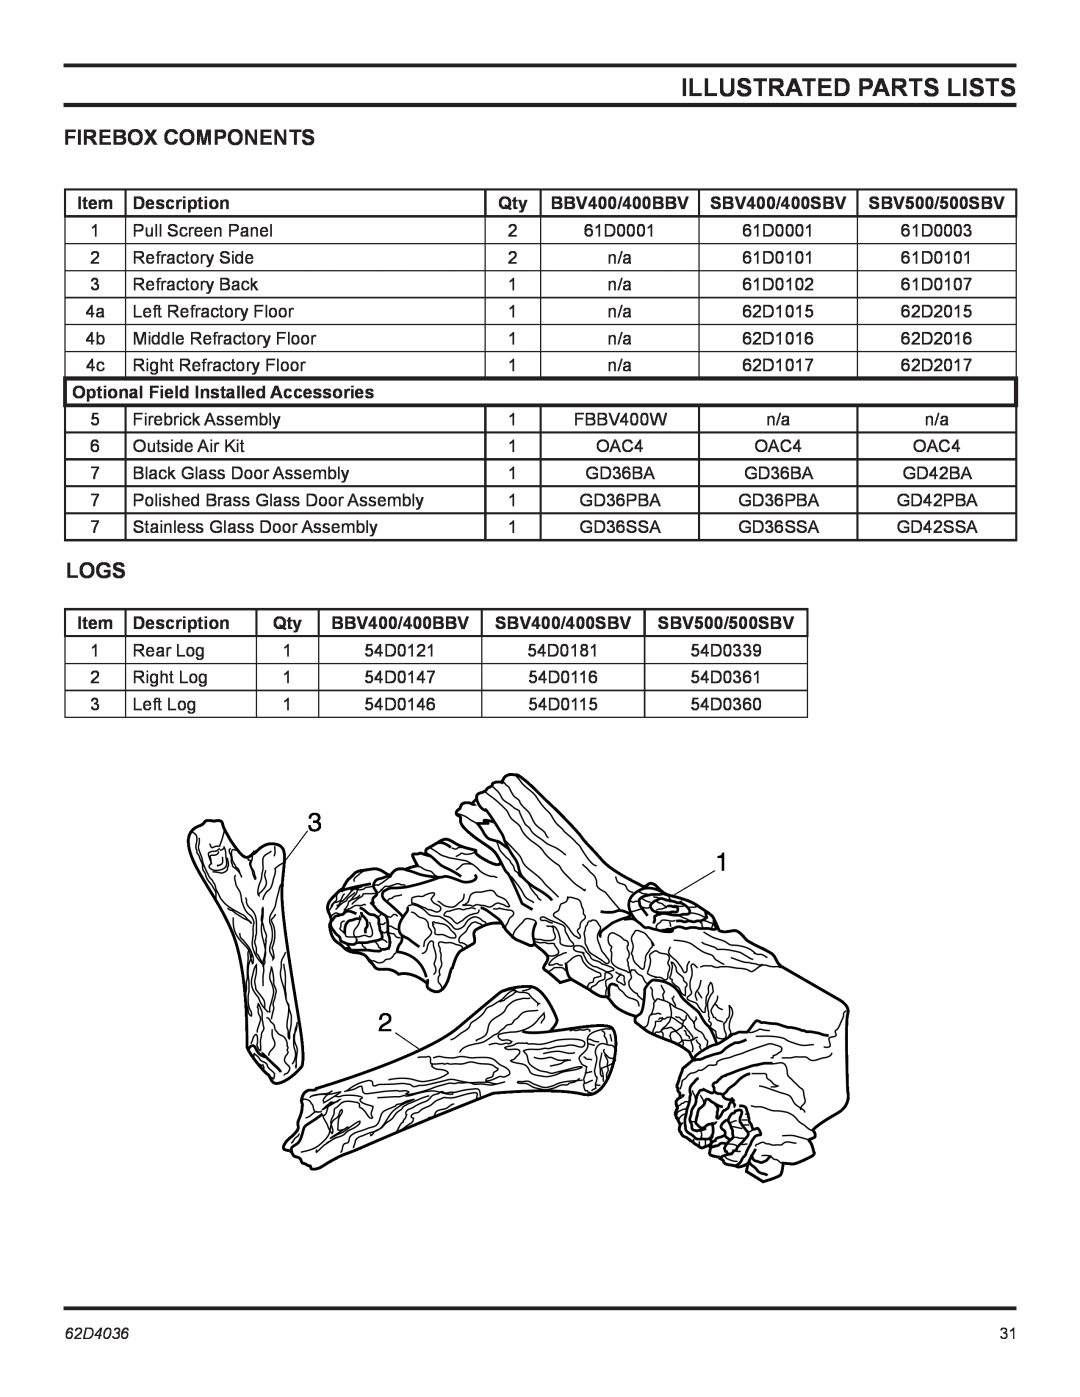 Monessen Hearth manual Illustrated Parts Lists, Item Description, Qty BBV400/400BBV SBV400/400SBV SBV500/500SBV 